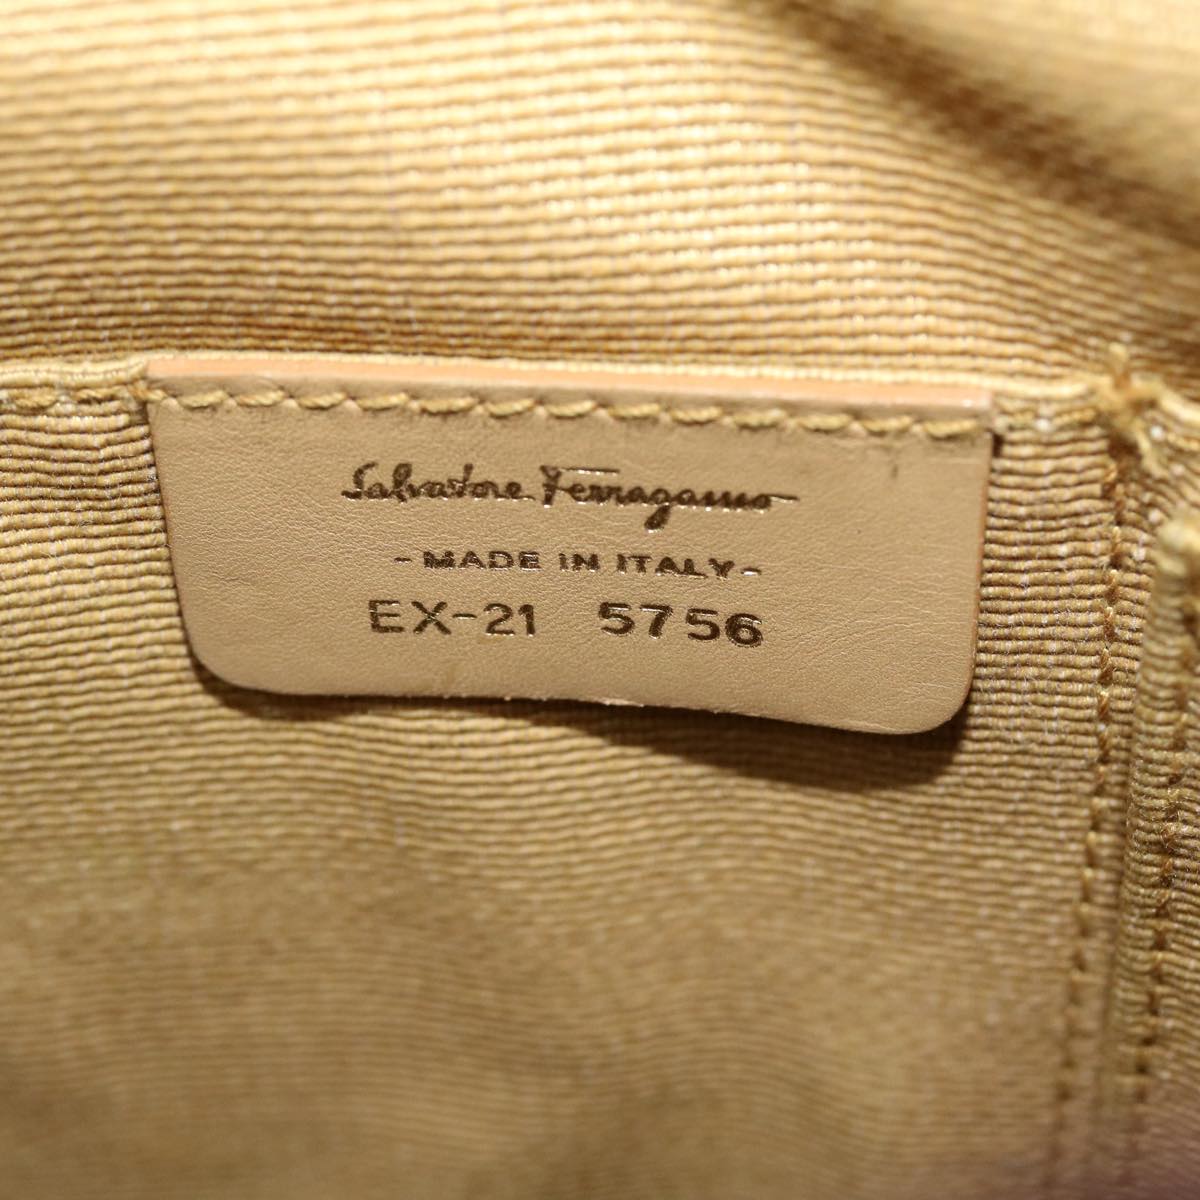 Salvatore Ferragamo Shoulder Bag Canvas Beige EX-21 5756 Auth cl508